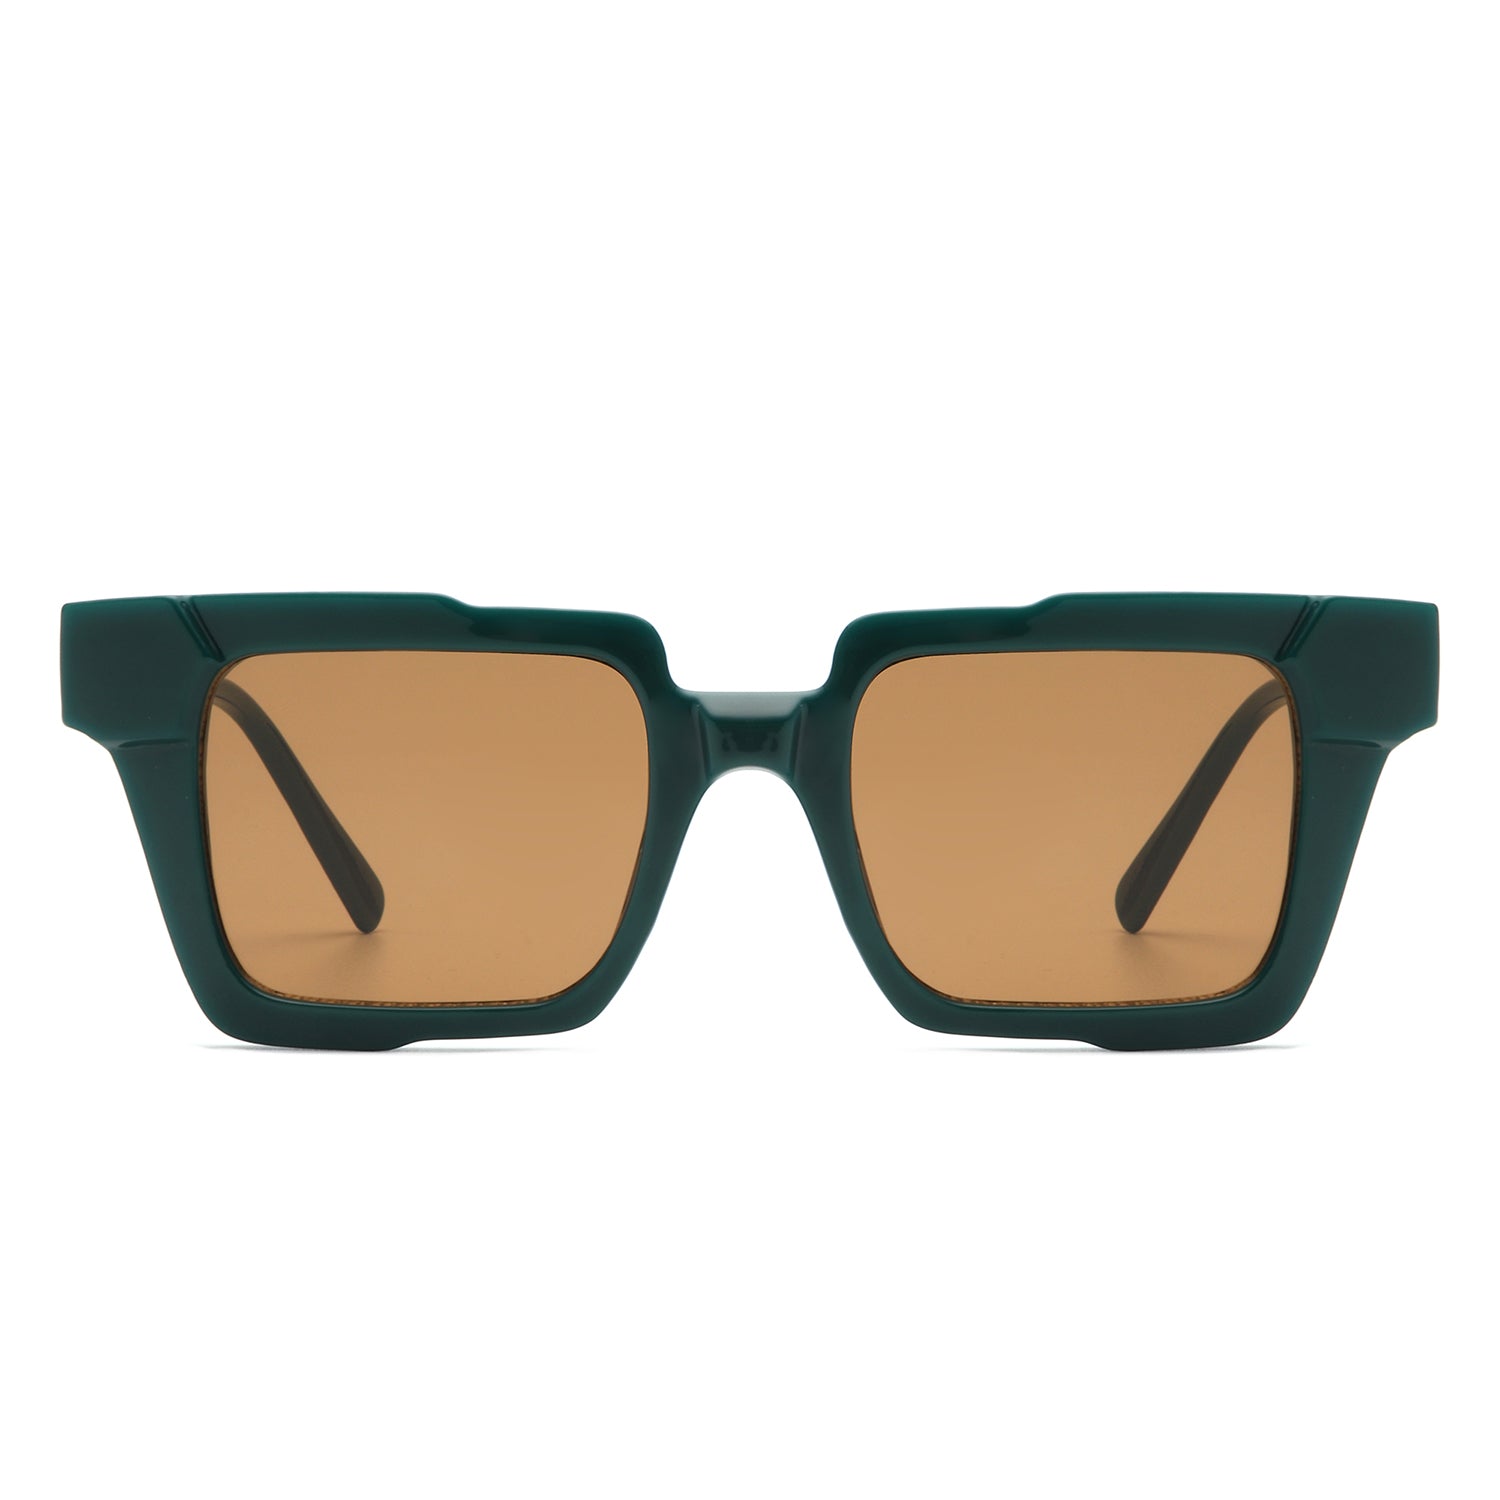 HS1262 - Square Geometric Fashion Flat Top Wholesale Sunglasses